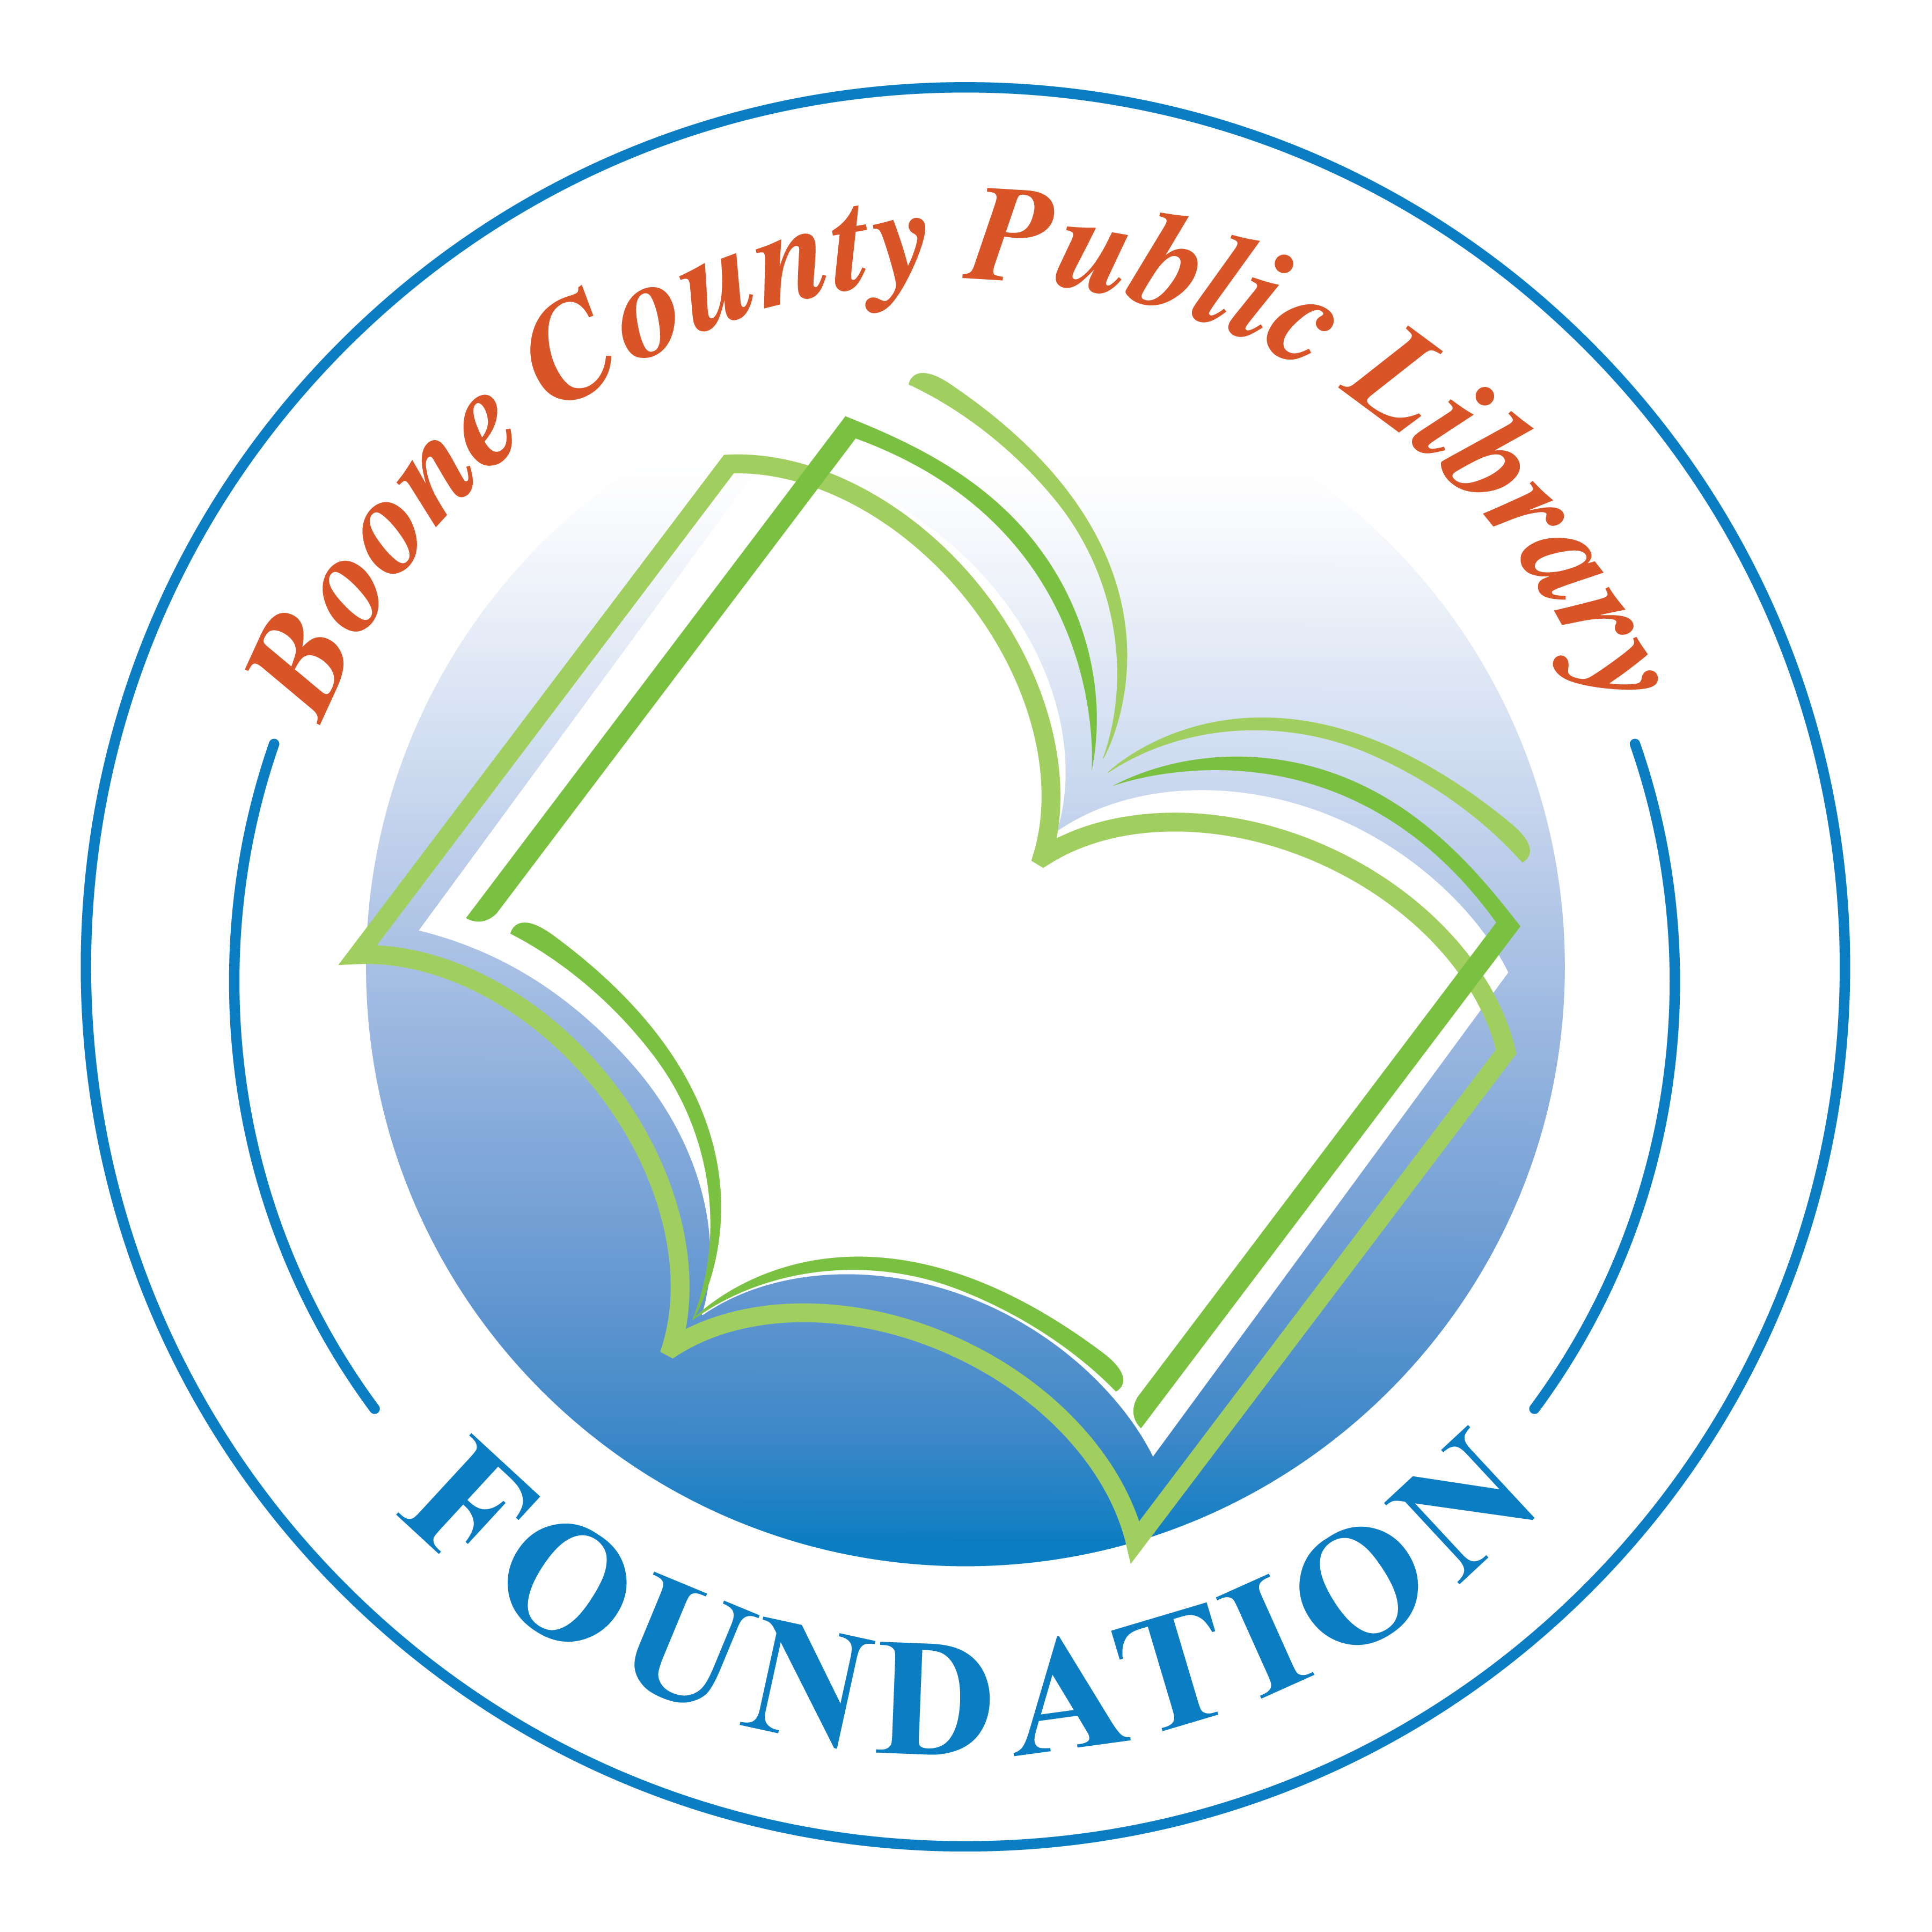 Boone County Public Library Foundation logo